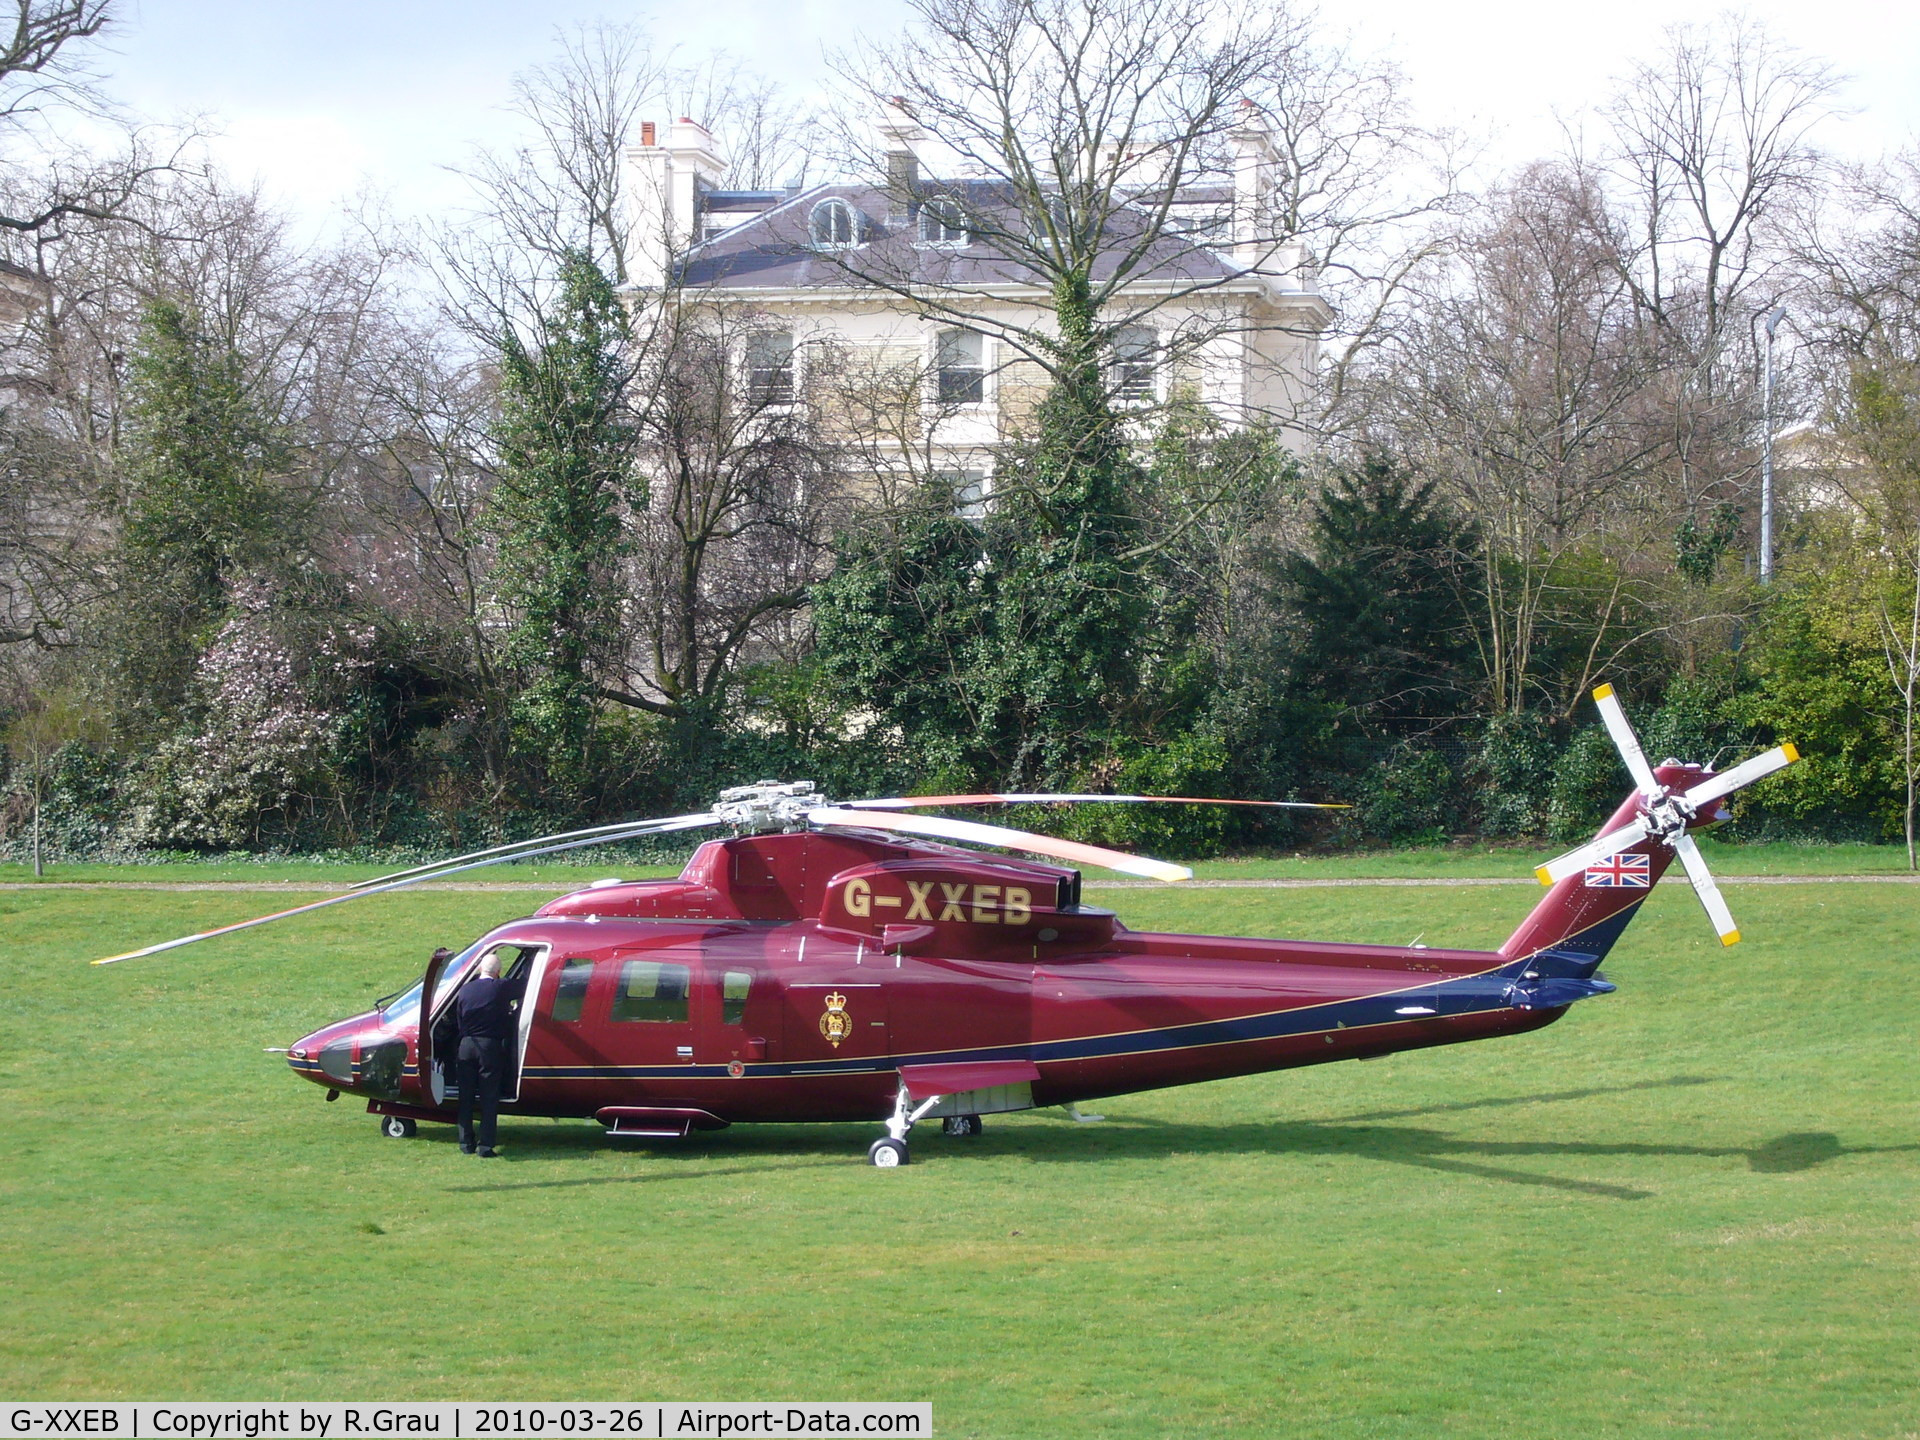 G-XXEB, 2009 Sikorsky S-76C C/N 760753, near Kensington Palace